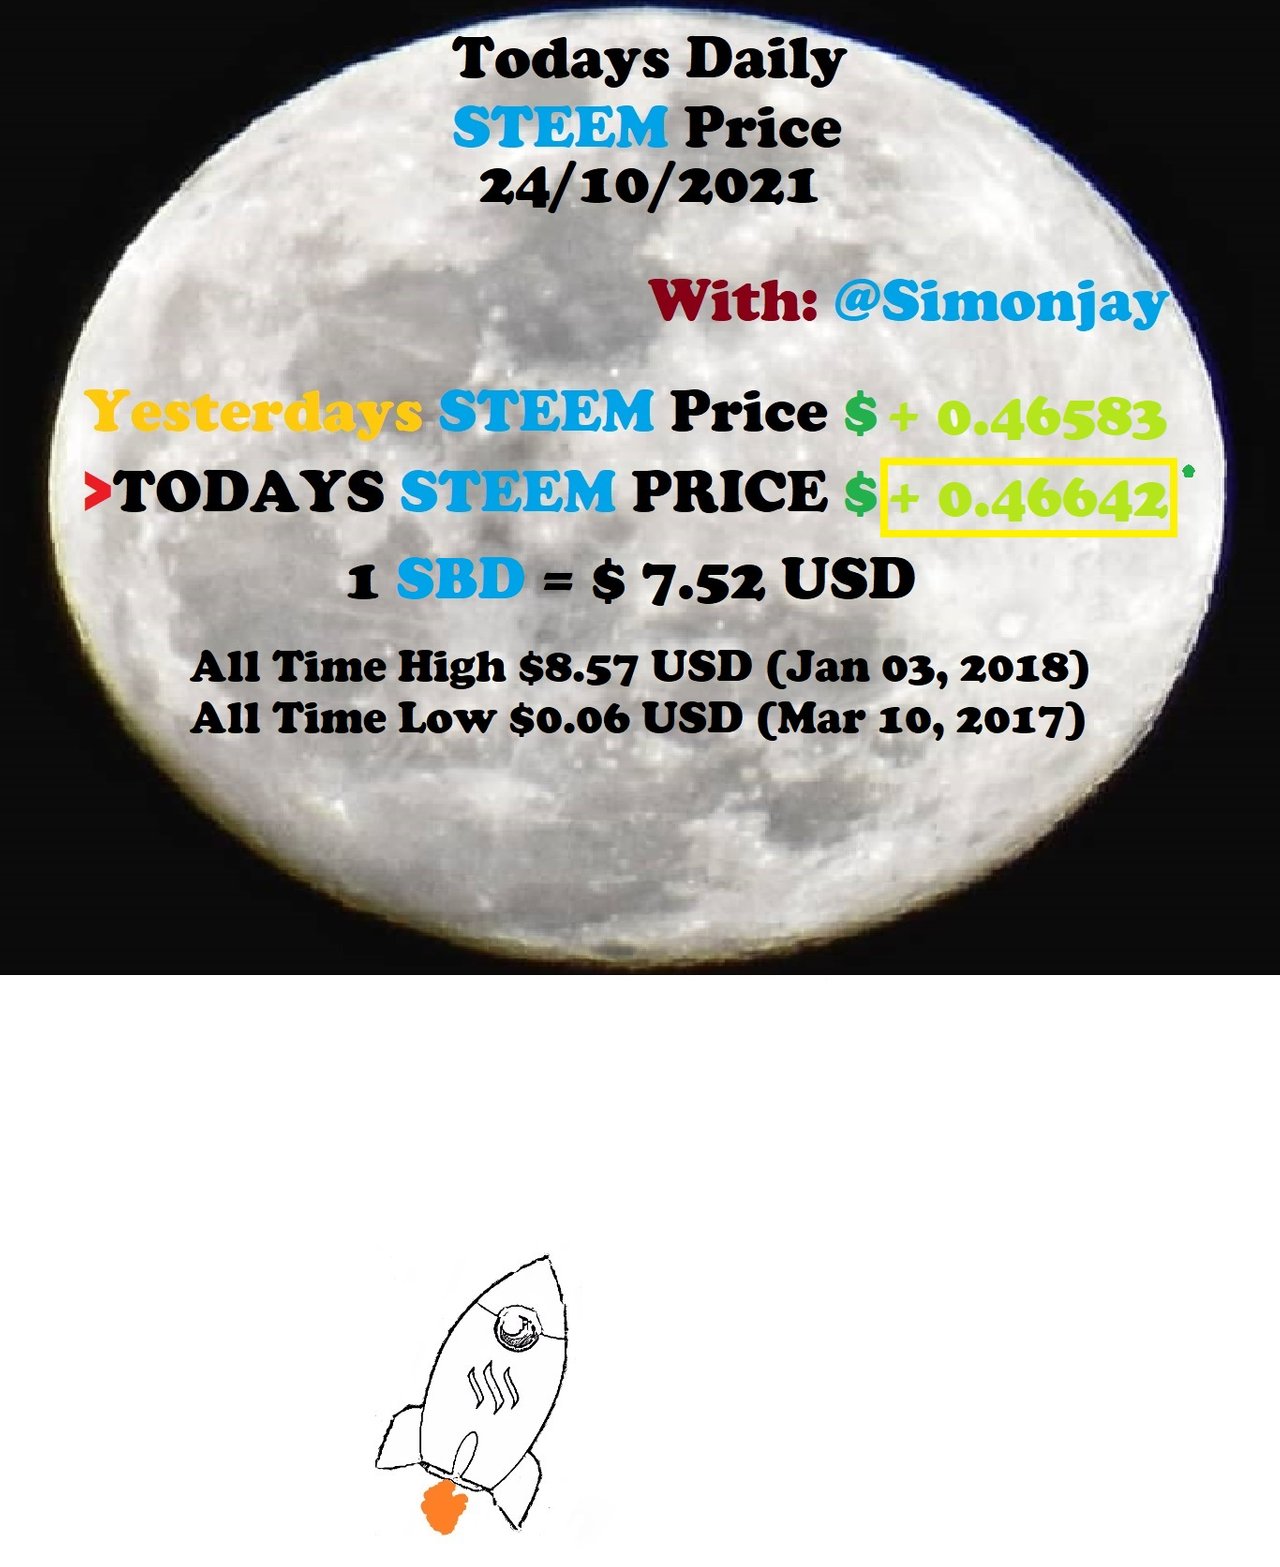 Steem Daily Price MoonTemplate24102021.jpg